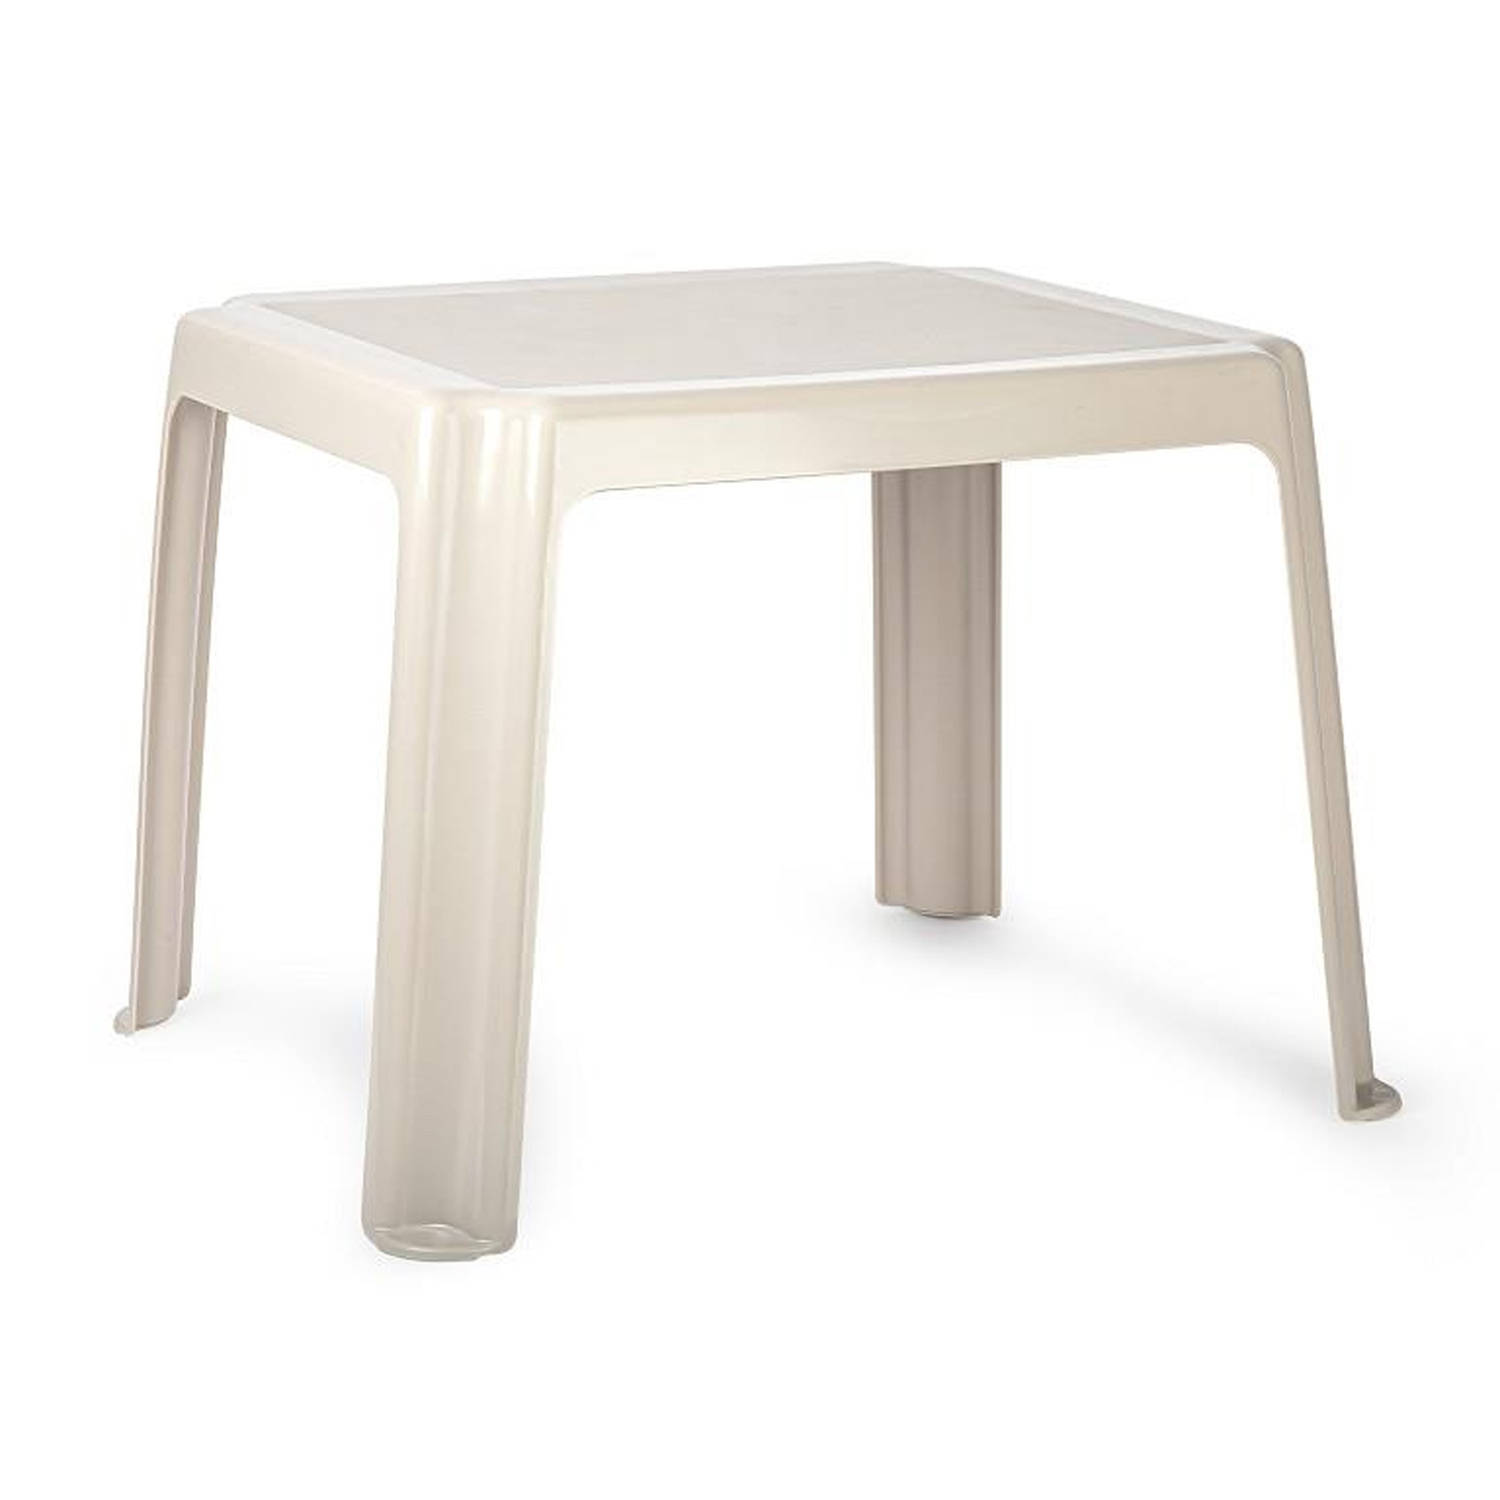 Forte Plastics Kunststof kindertafel - beige - 55 x 66 x 43 cm - camping/tuin/kinderkamer - Bijzettafels